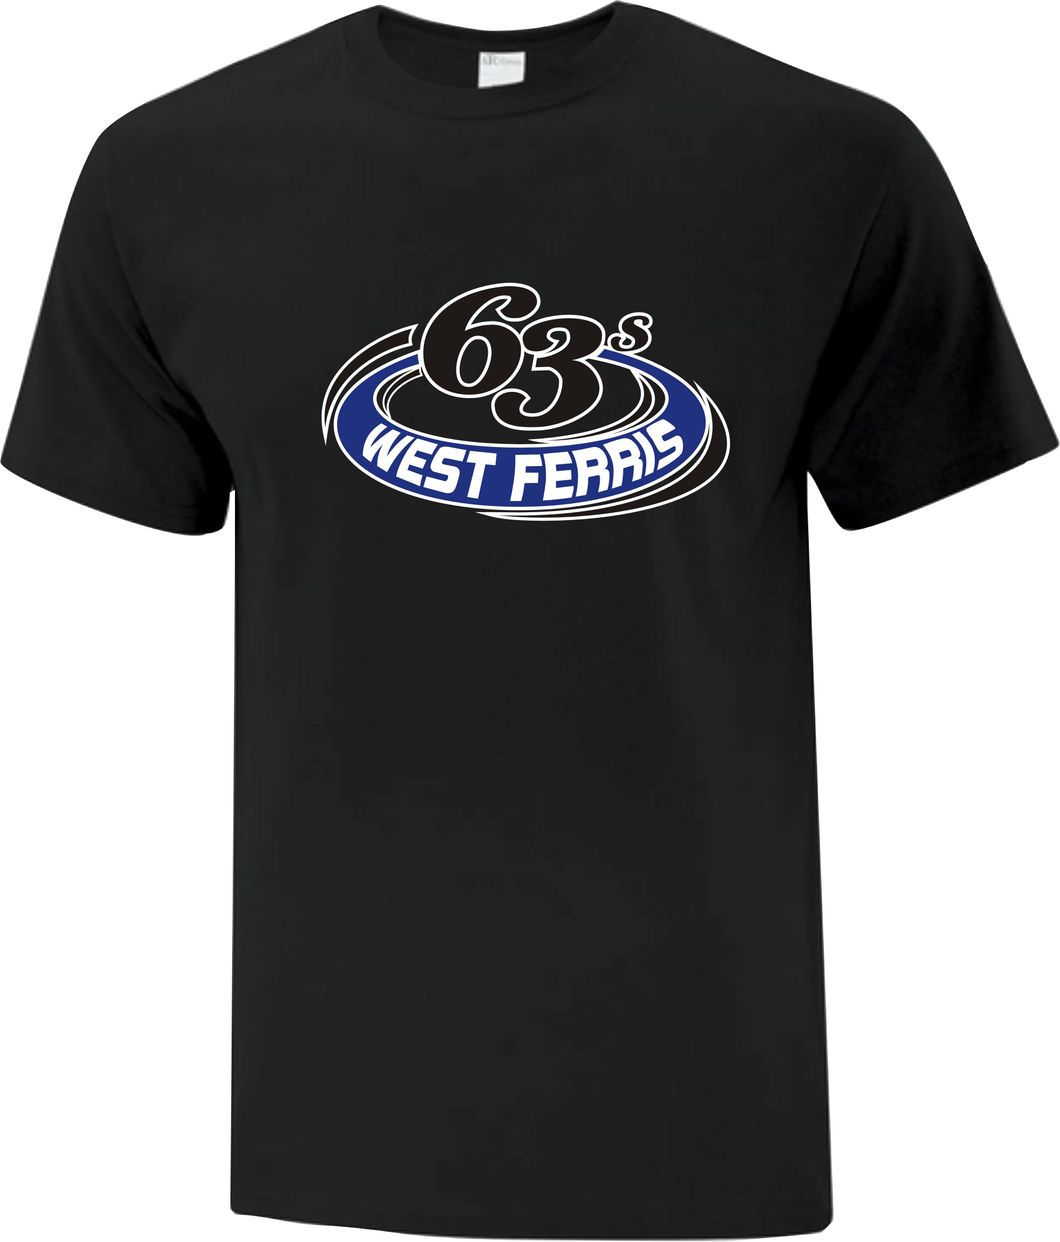 West Ferris 63's T-shirt